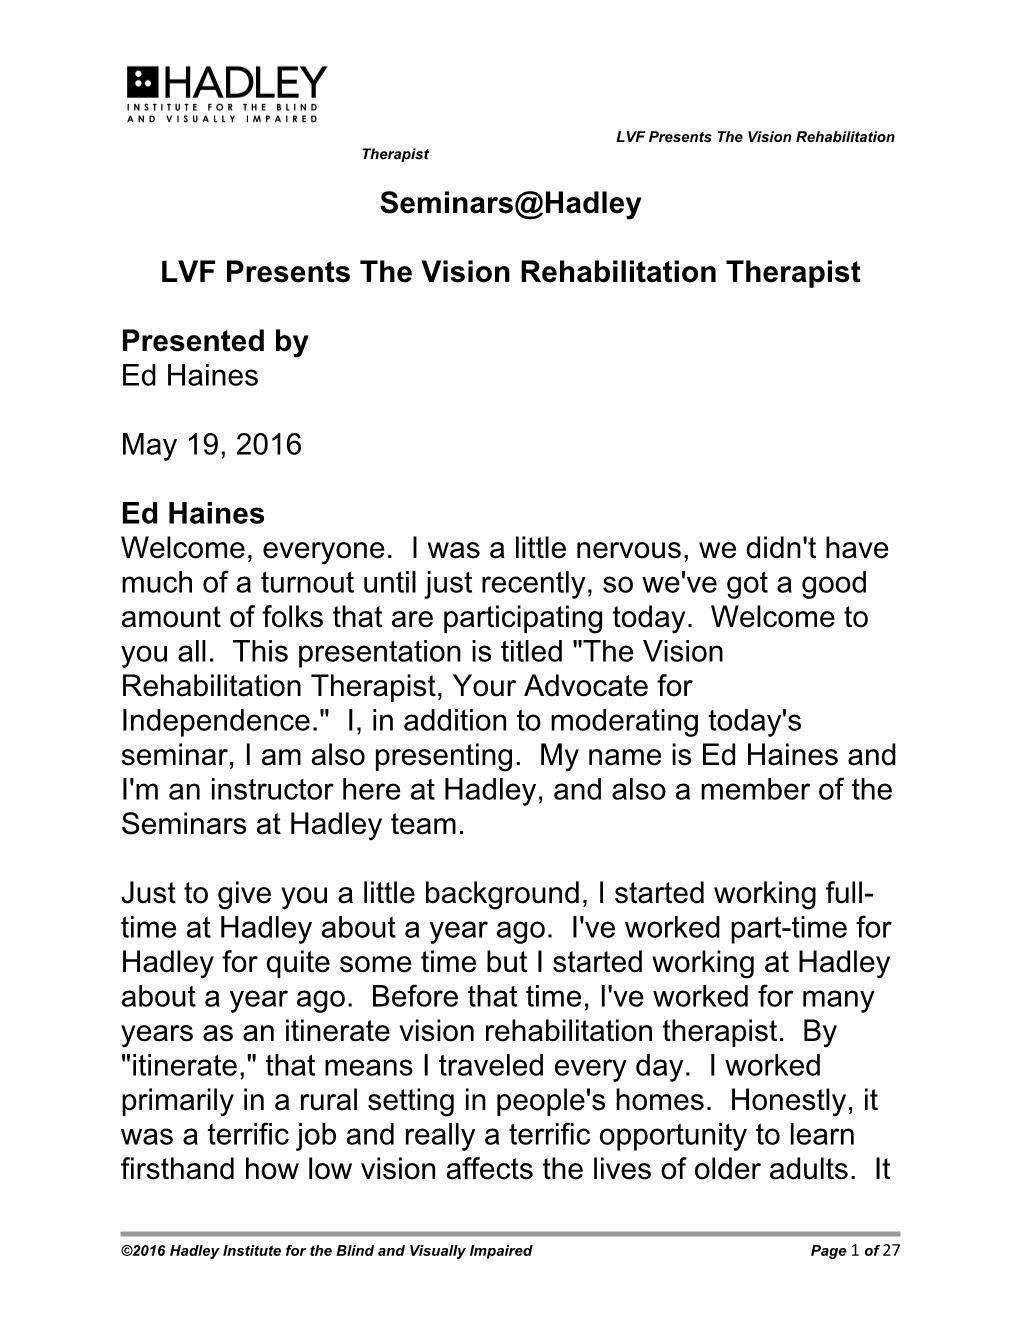 LVF Presents the Vision Rehabilitation Therapist